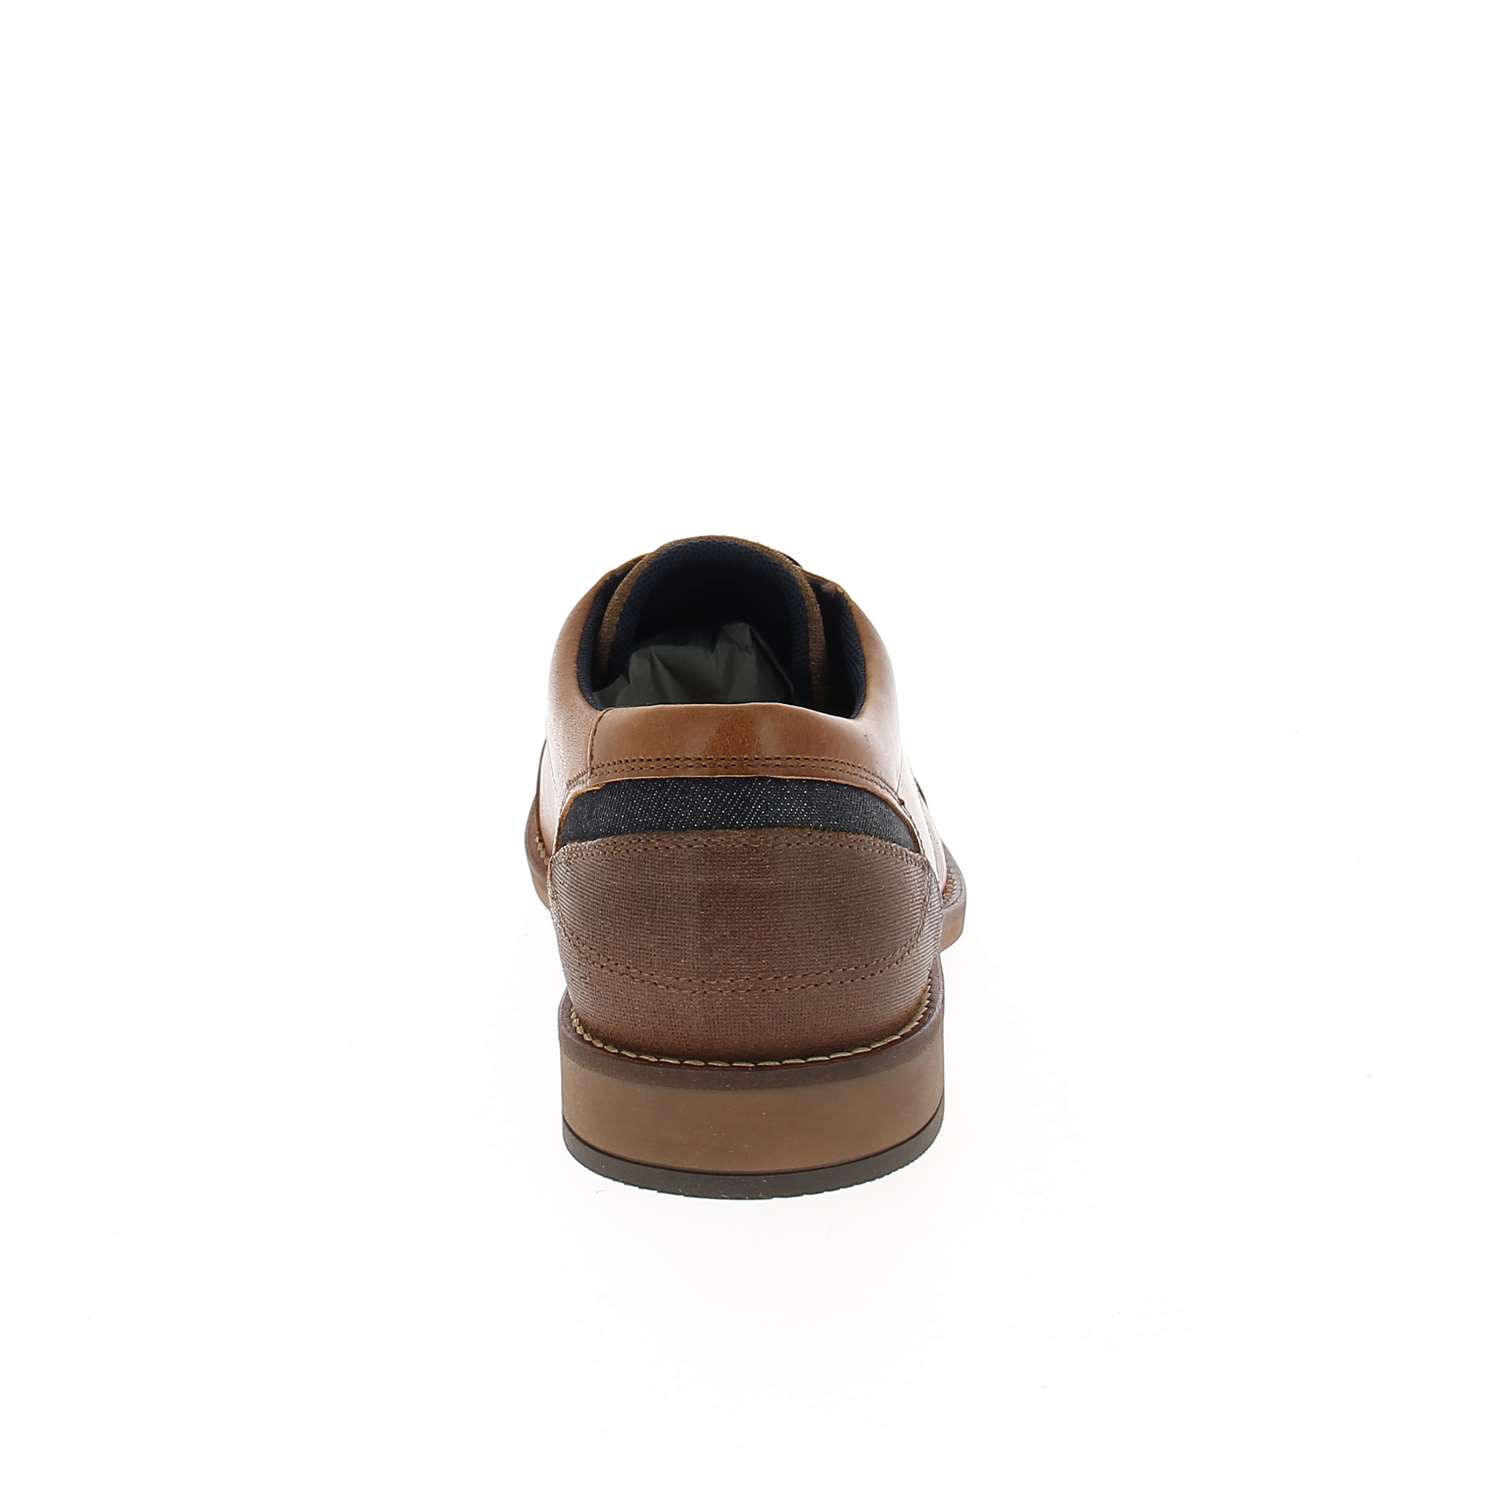 04 - BULCRES - BULLBOXER - Chaussures à lacets - Cuir